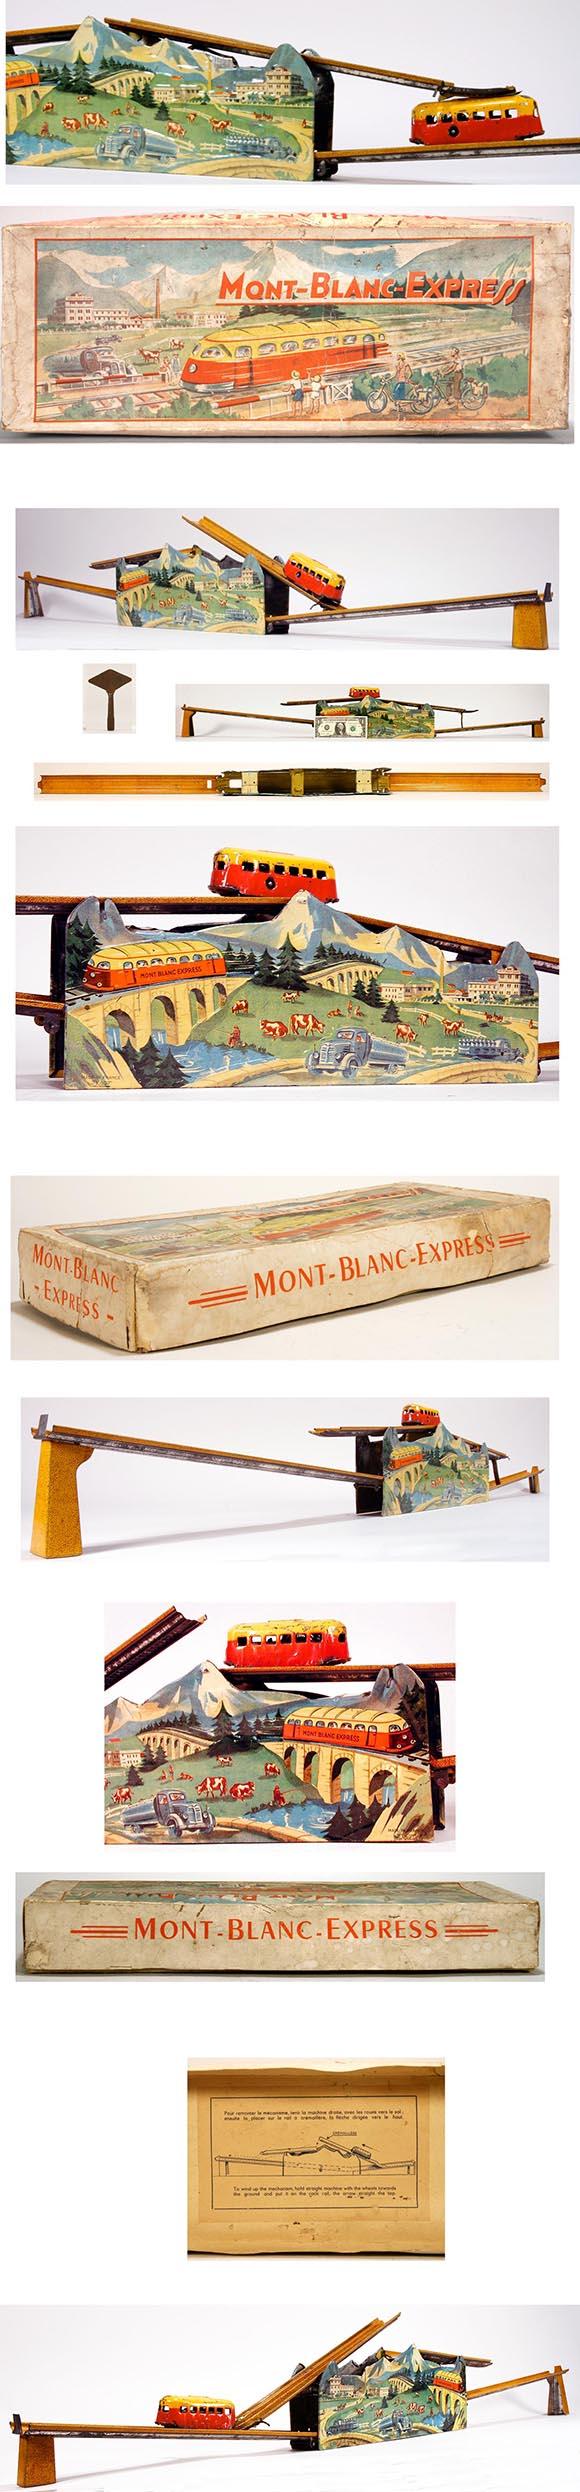 c.1946 Jouets Mont-Blanc, Mont-Blanc-Express in Original Box